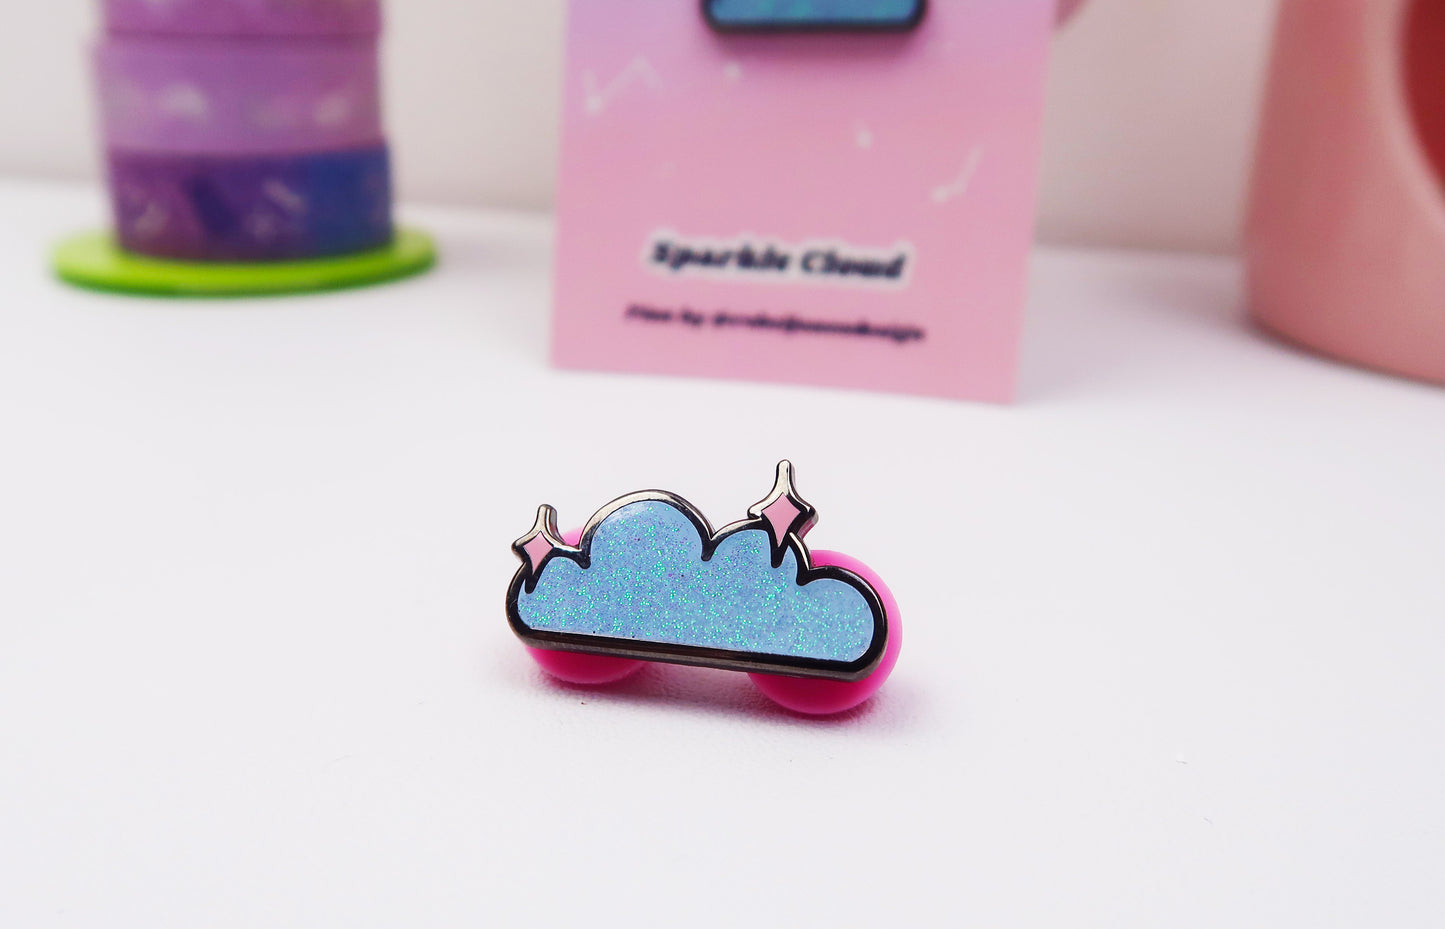 Sparkle cloud mini pin